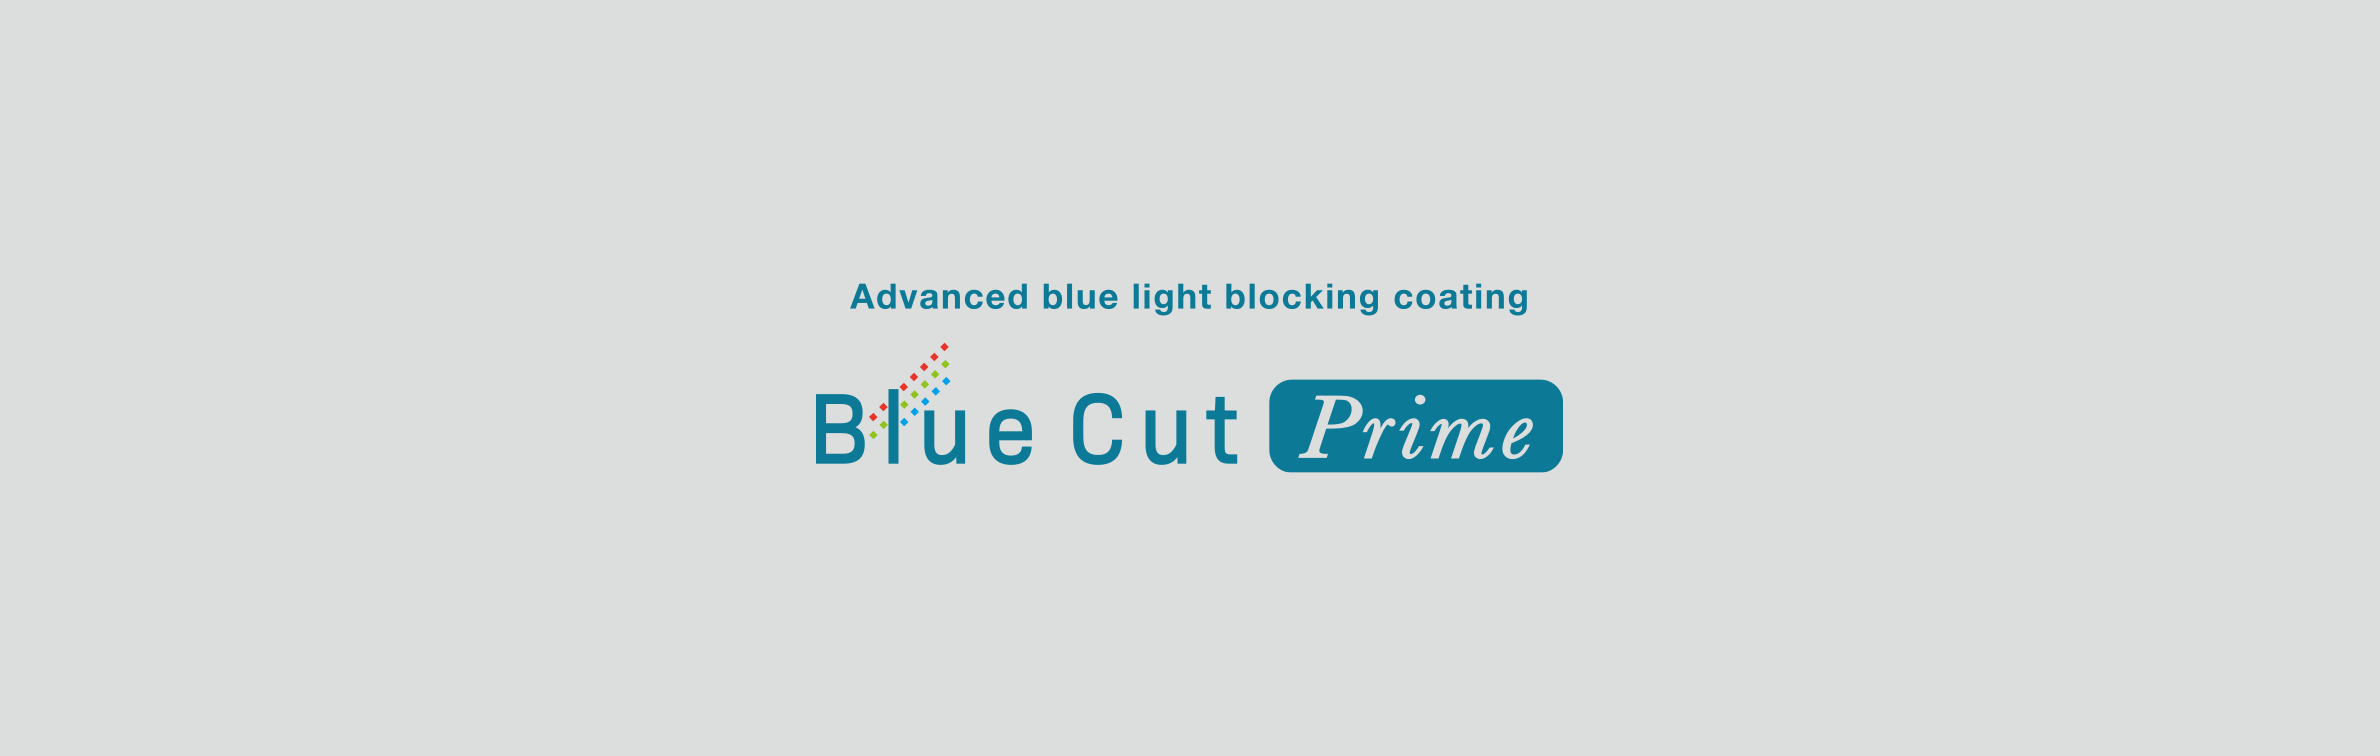 BCP (Blue Cut Prime)